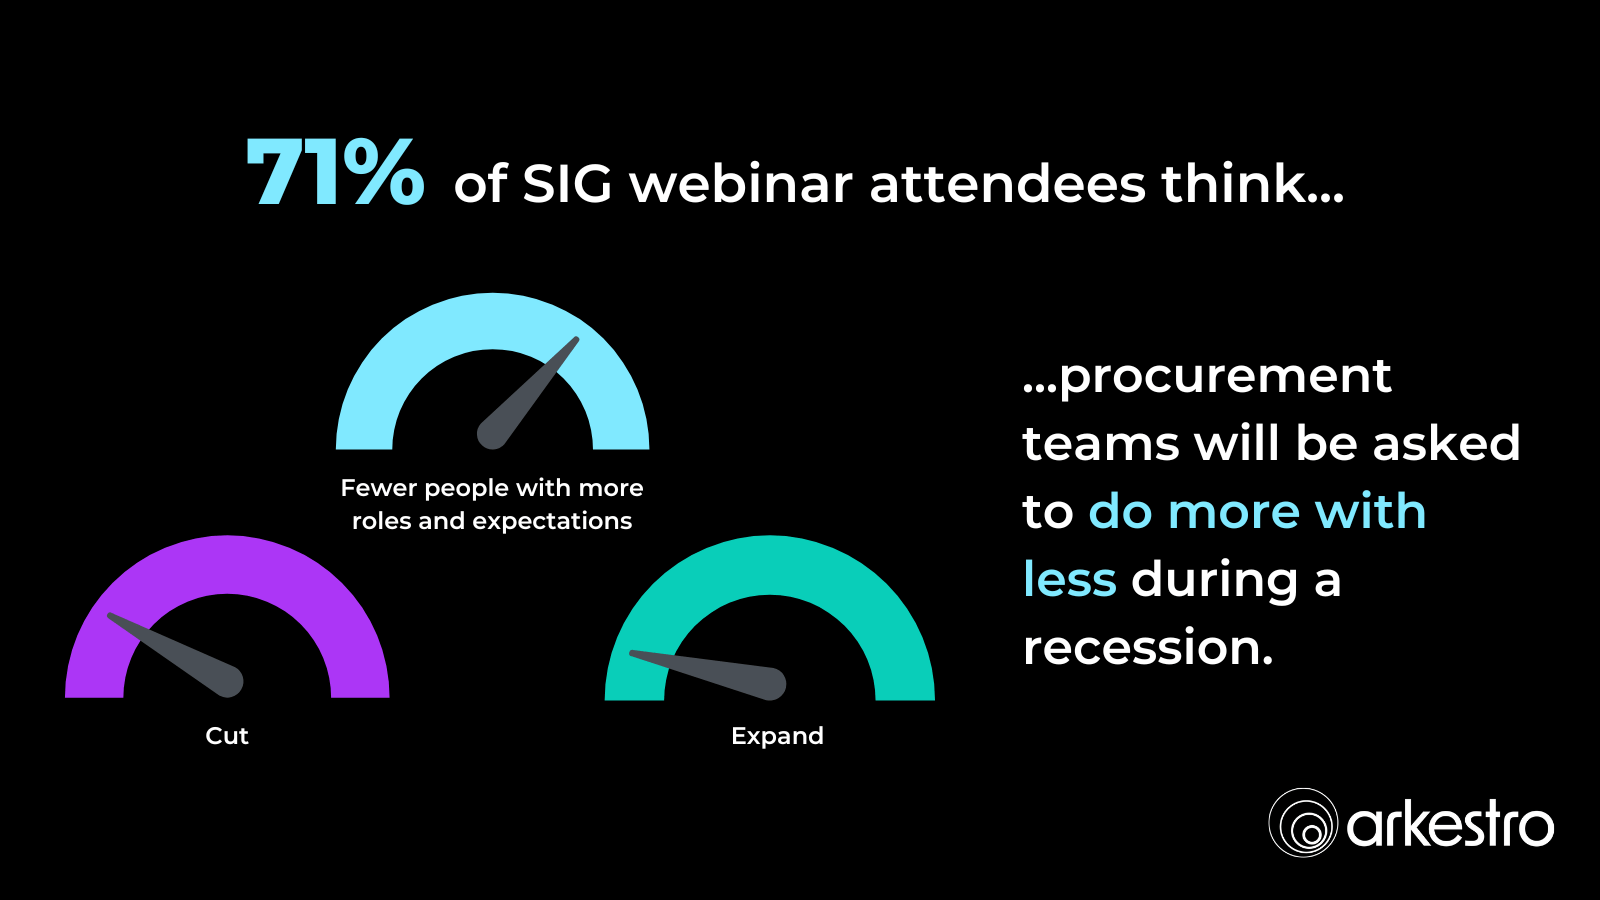 71% of SIG webinar attendees think...